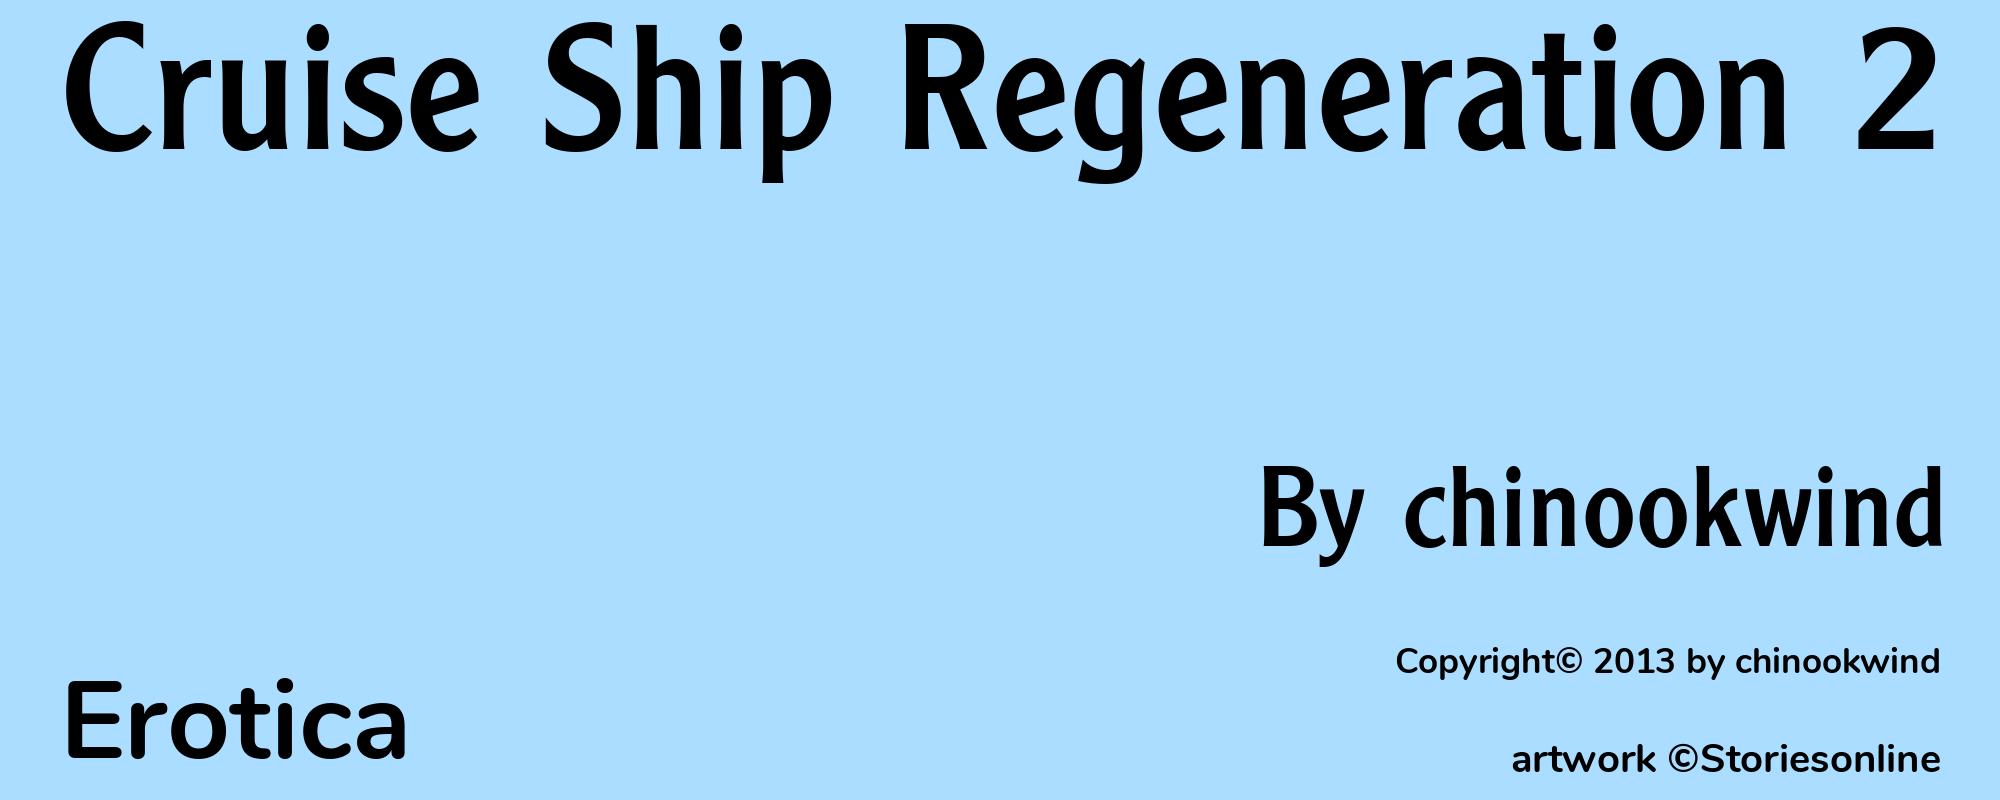 Cruise Ship Regeneration 2 - Cover